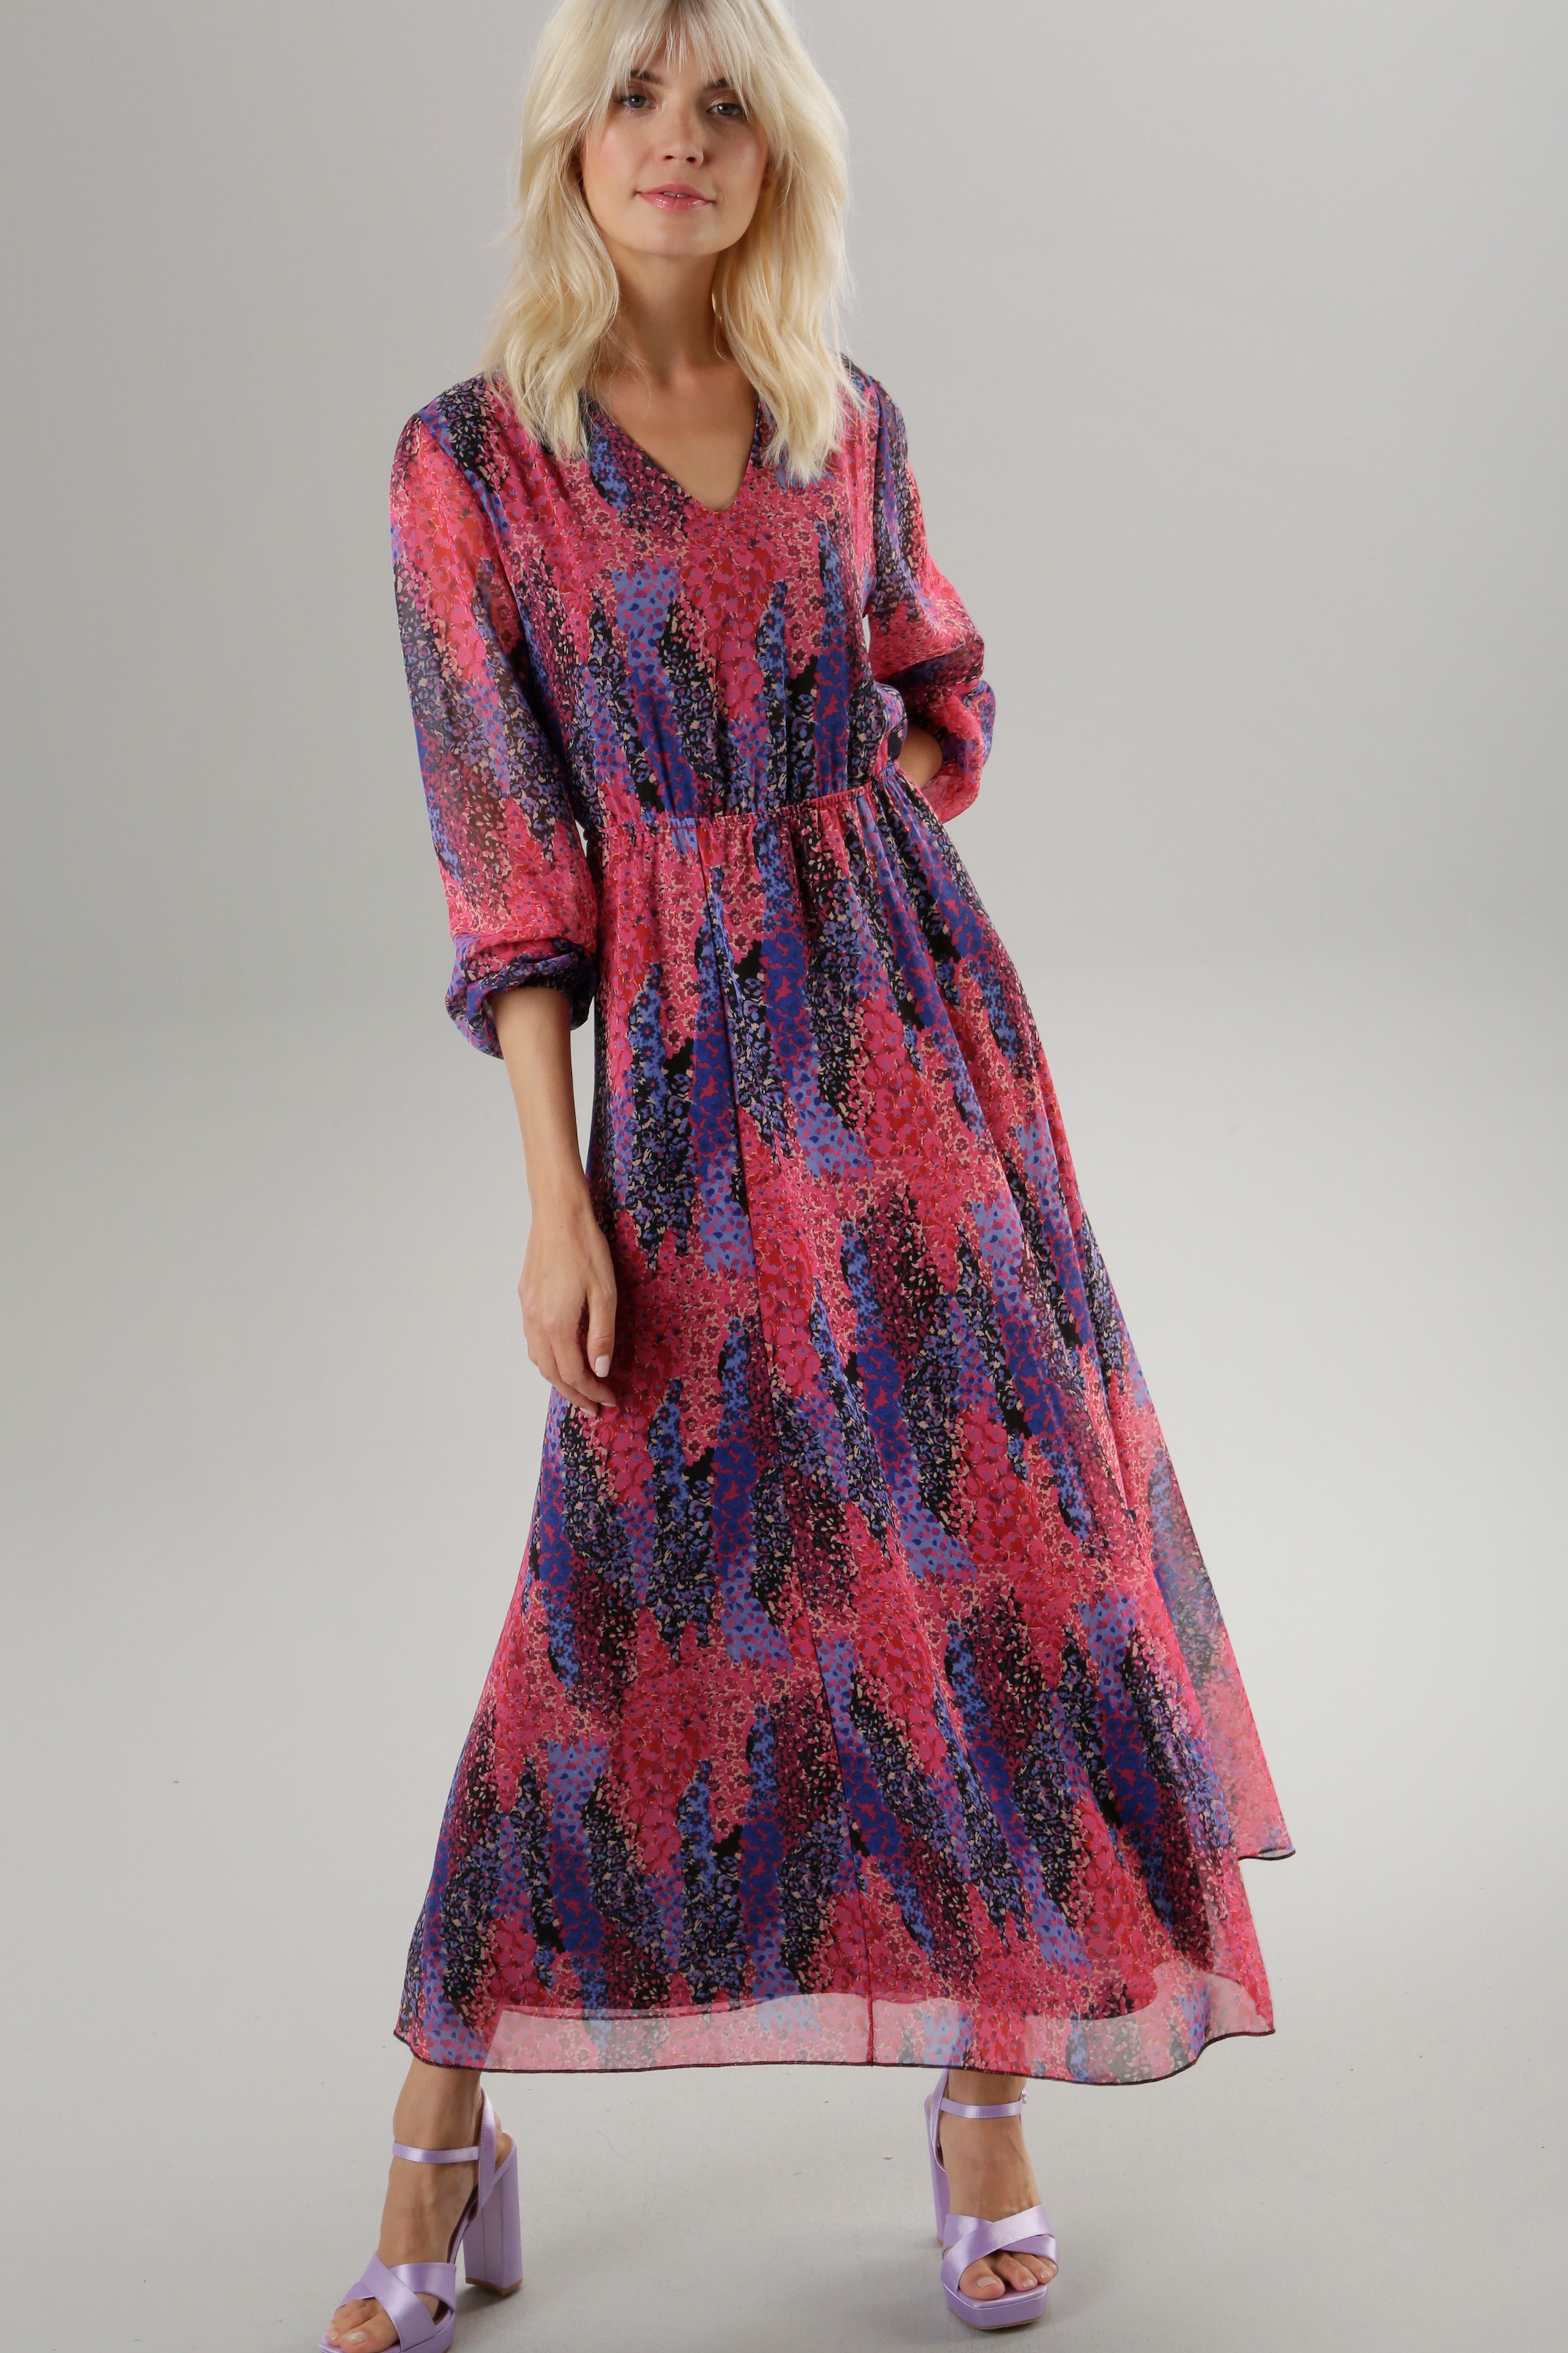 SELECTED Aniston Sommerkleid farbenfrohem Blumendruck mit